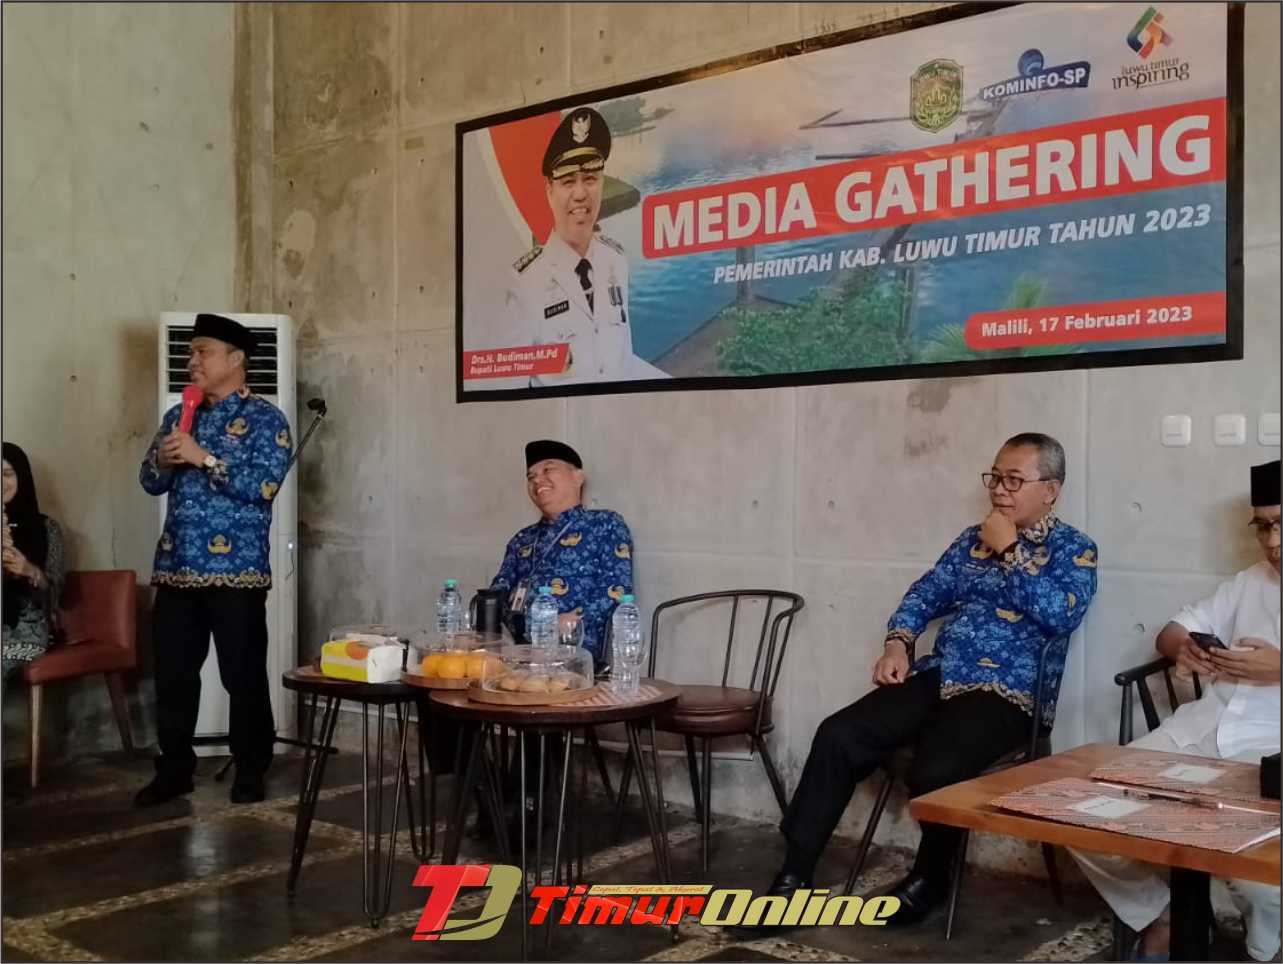 Media Gathering